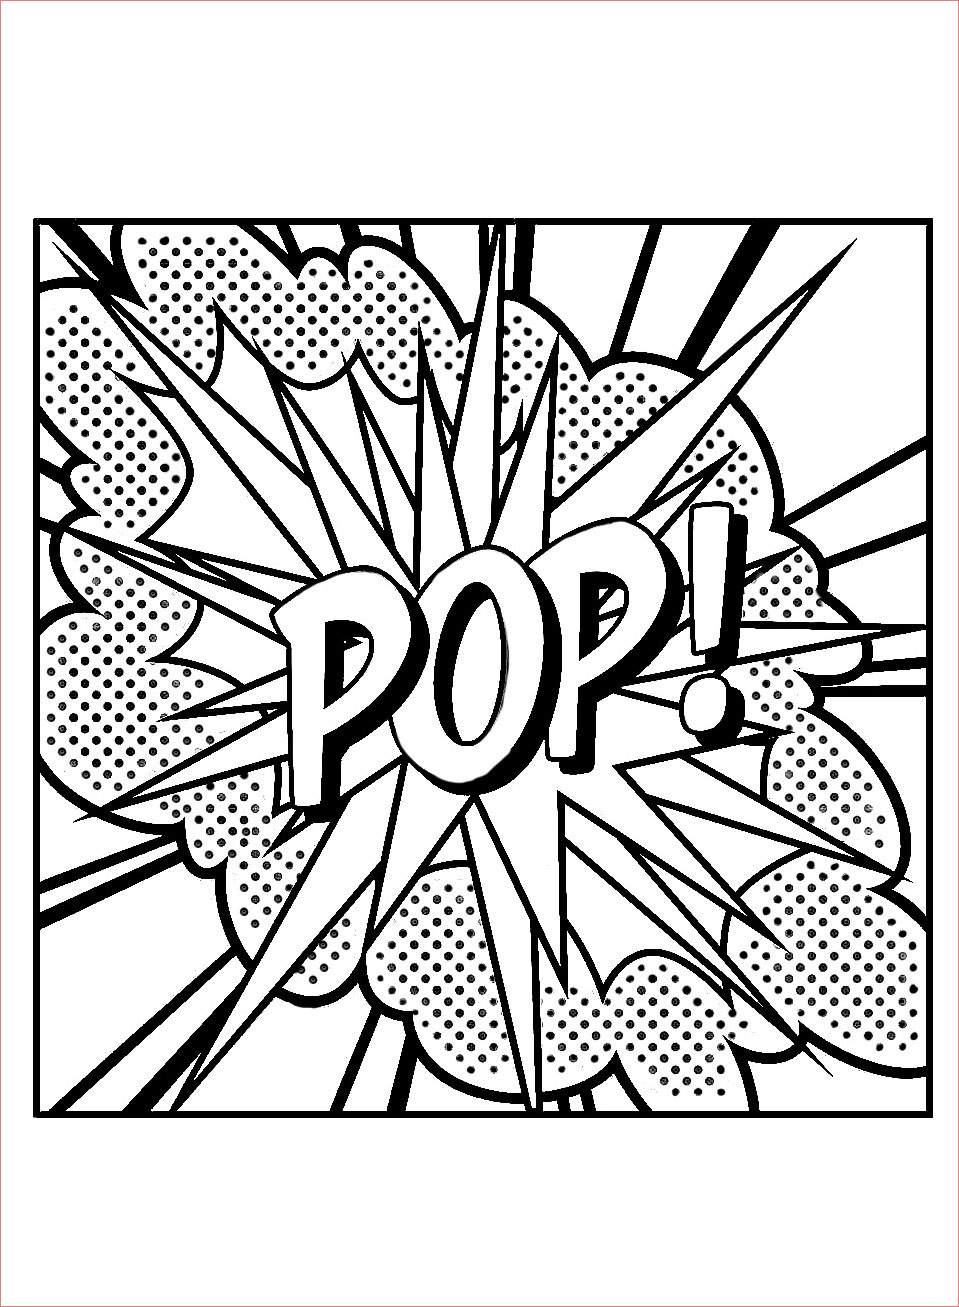 image=pop art coloring page adult pop roy lichtenstein 1